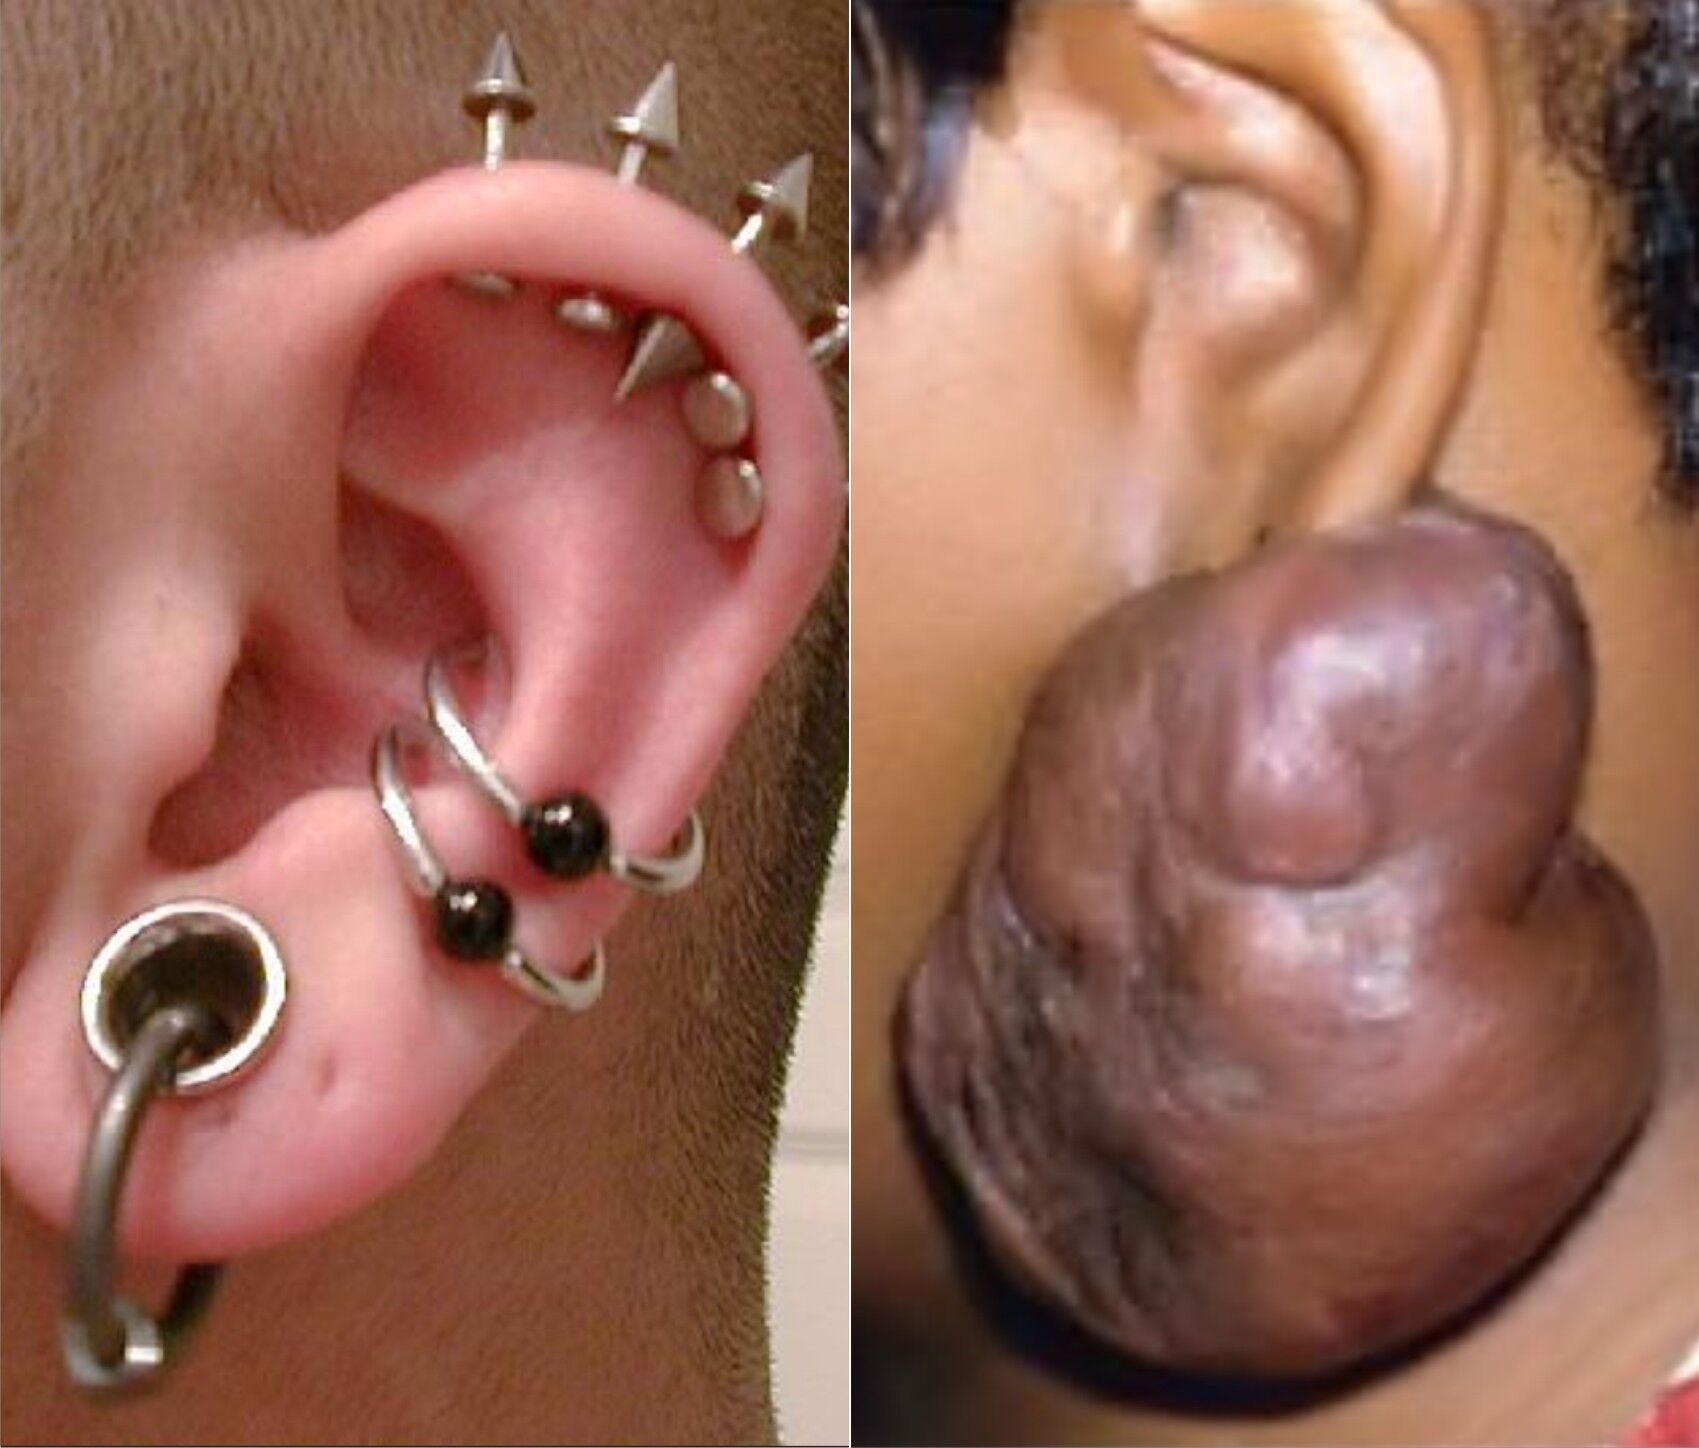 Earrings for Sensitive Ears: Your Ultimate Guide